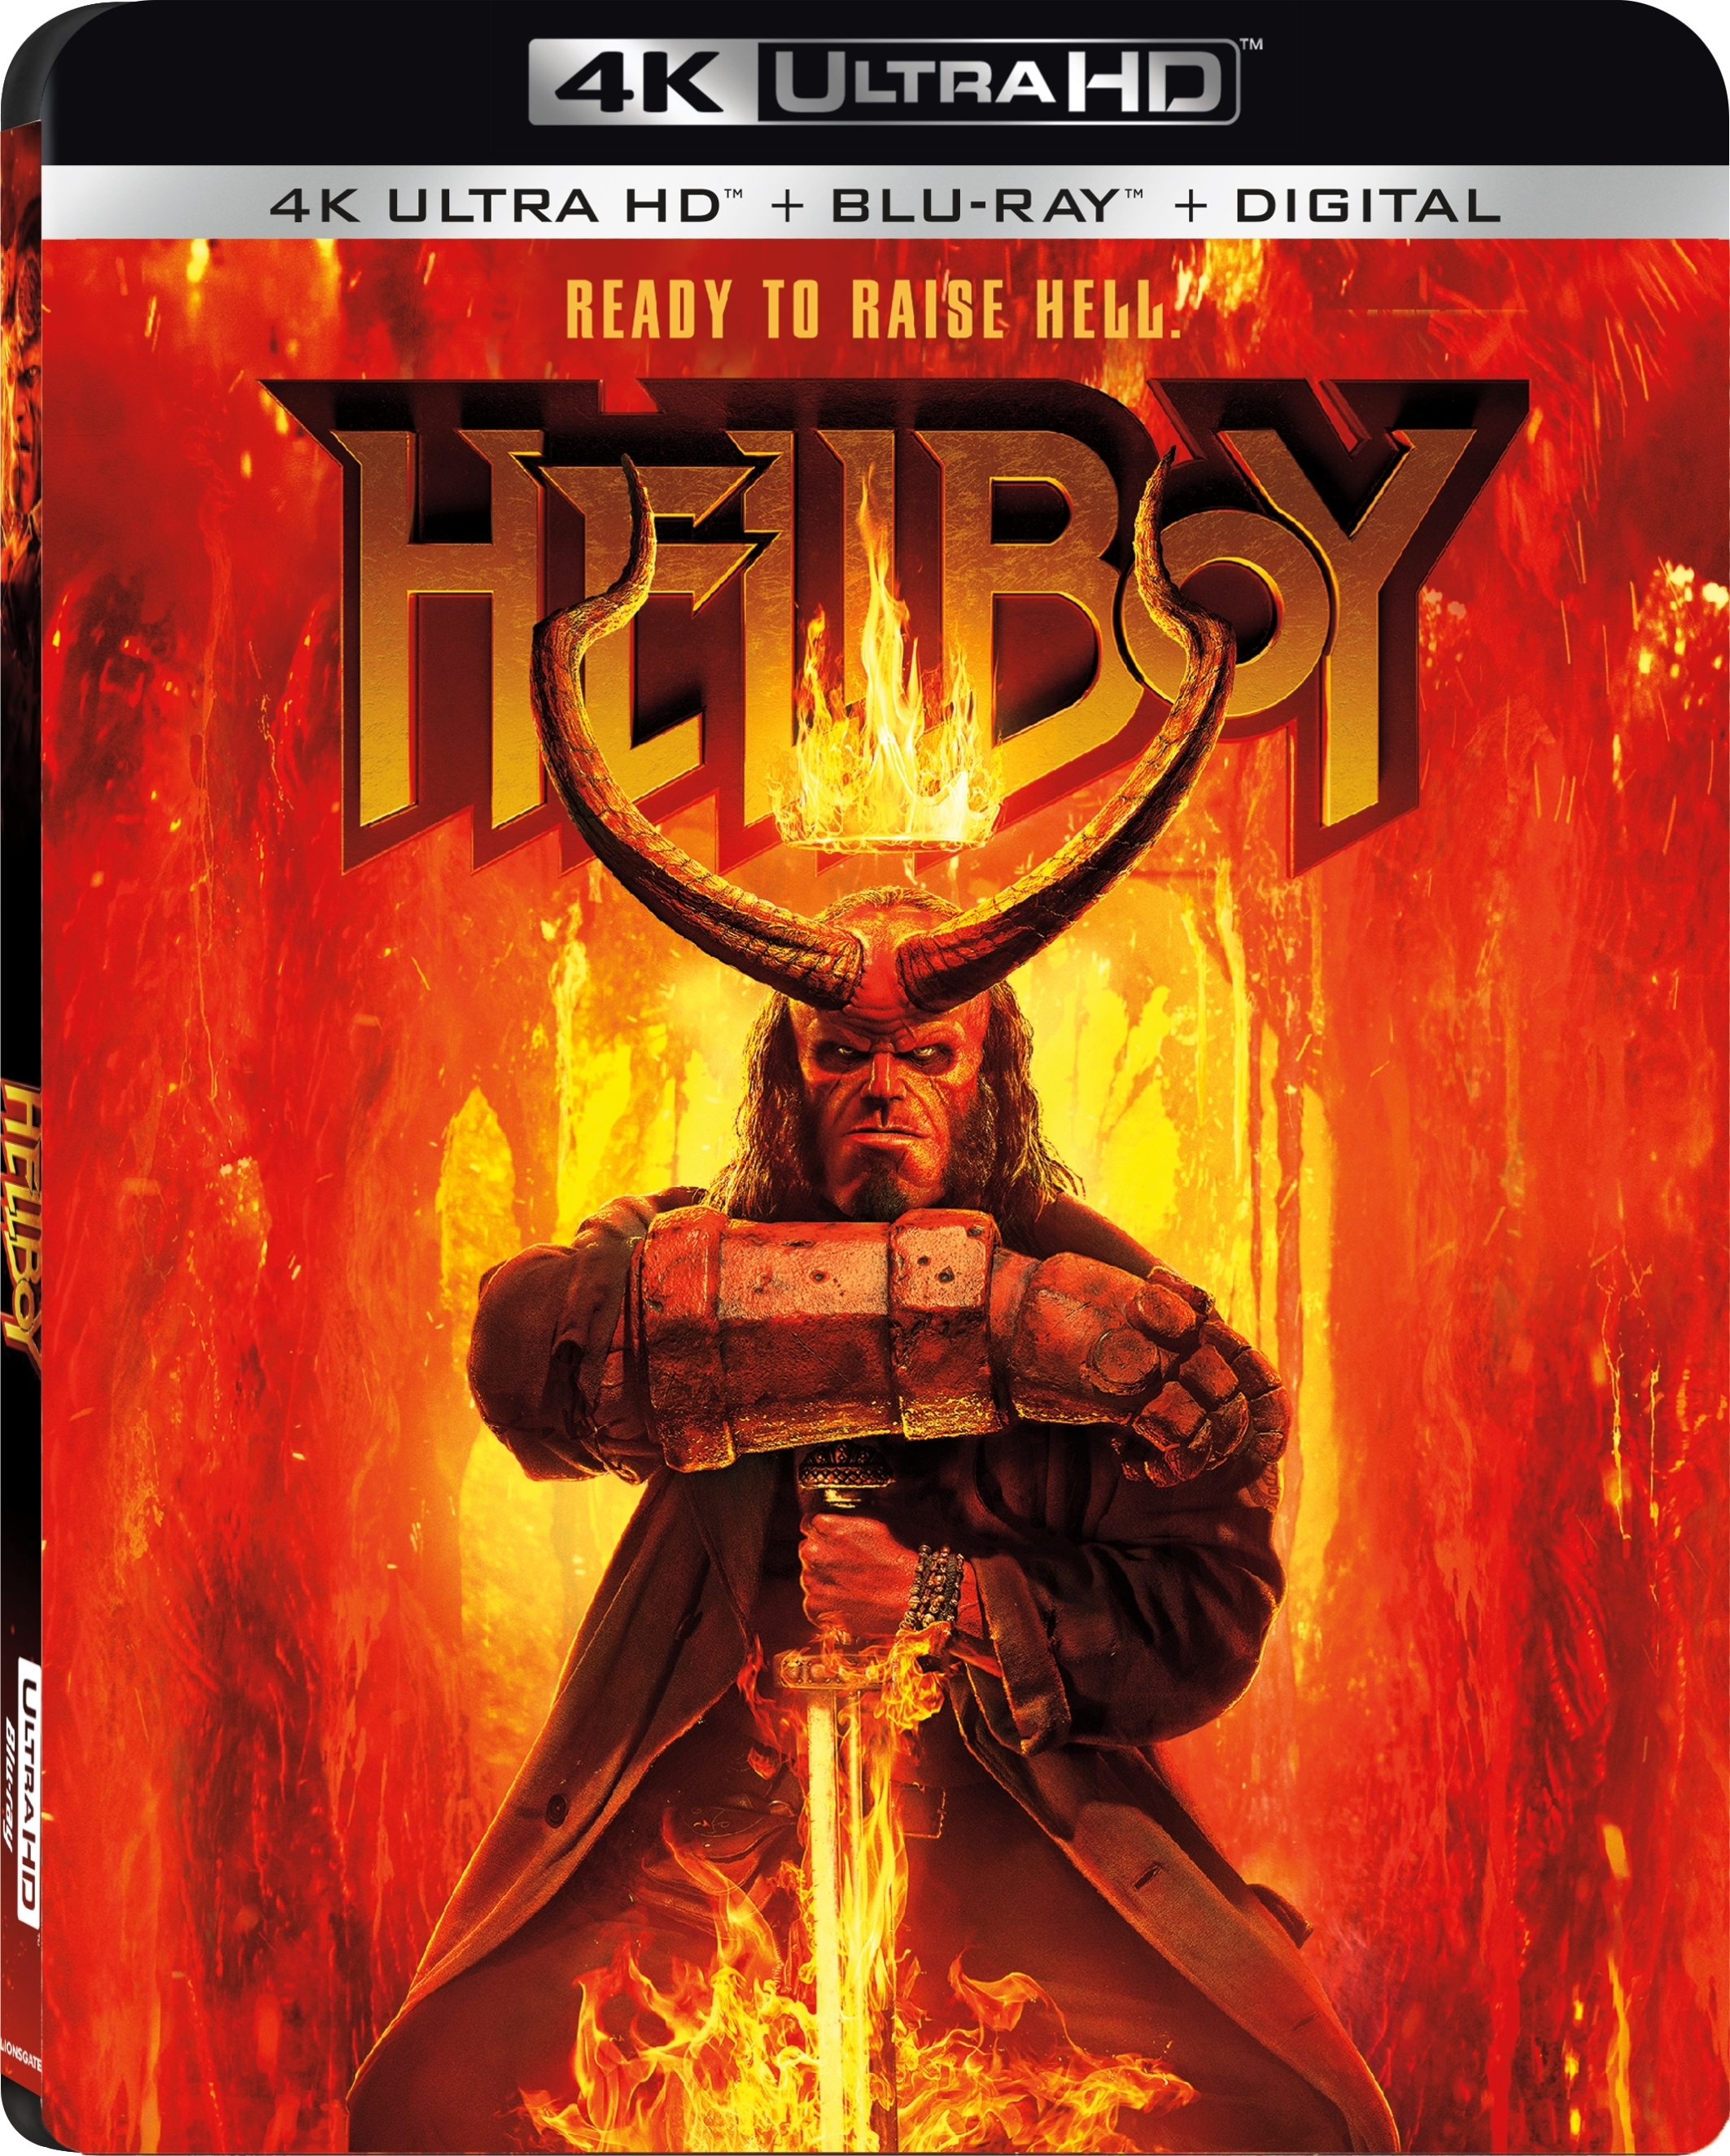 [地狱男爵·血皇后崛起].Hellboy.2019.BluRay.1080p.AVC.TrueHD.7.1-DiY@HDHome    46.12G-1.jpg